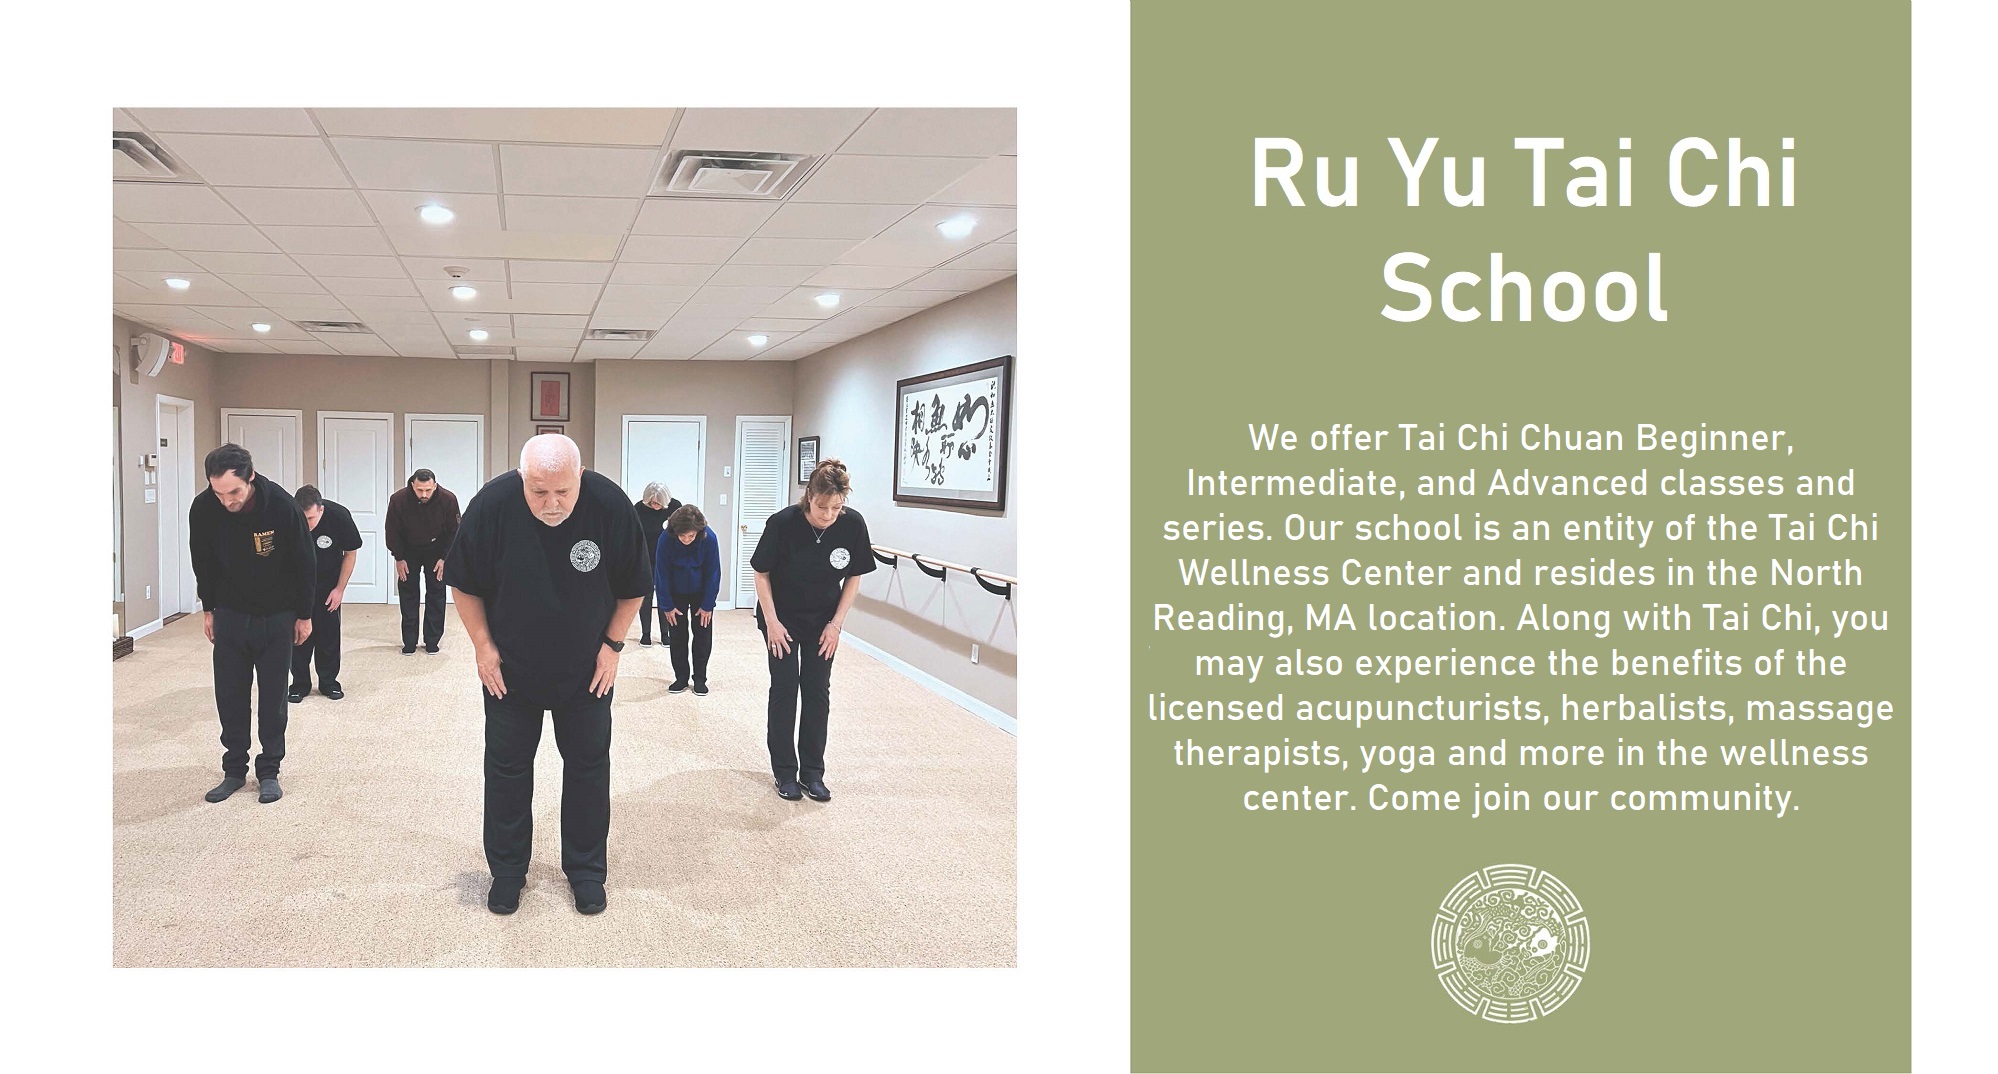 Ru Yu Tai Chi School